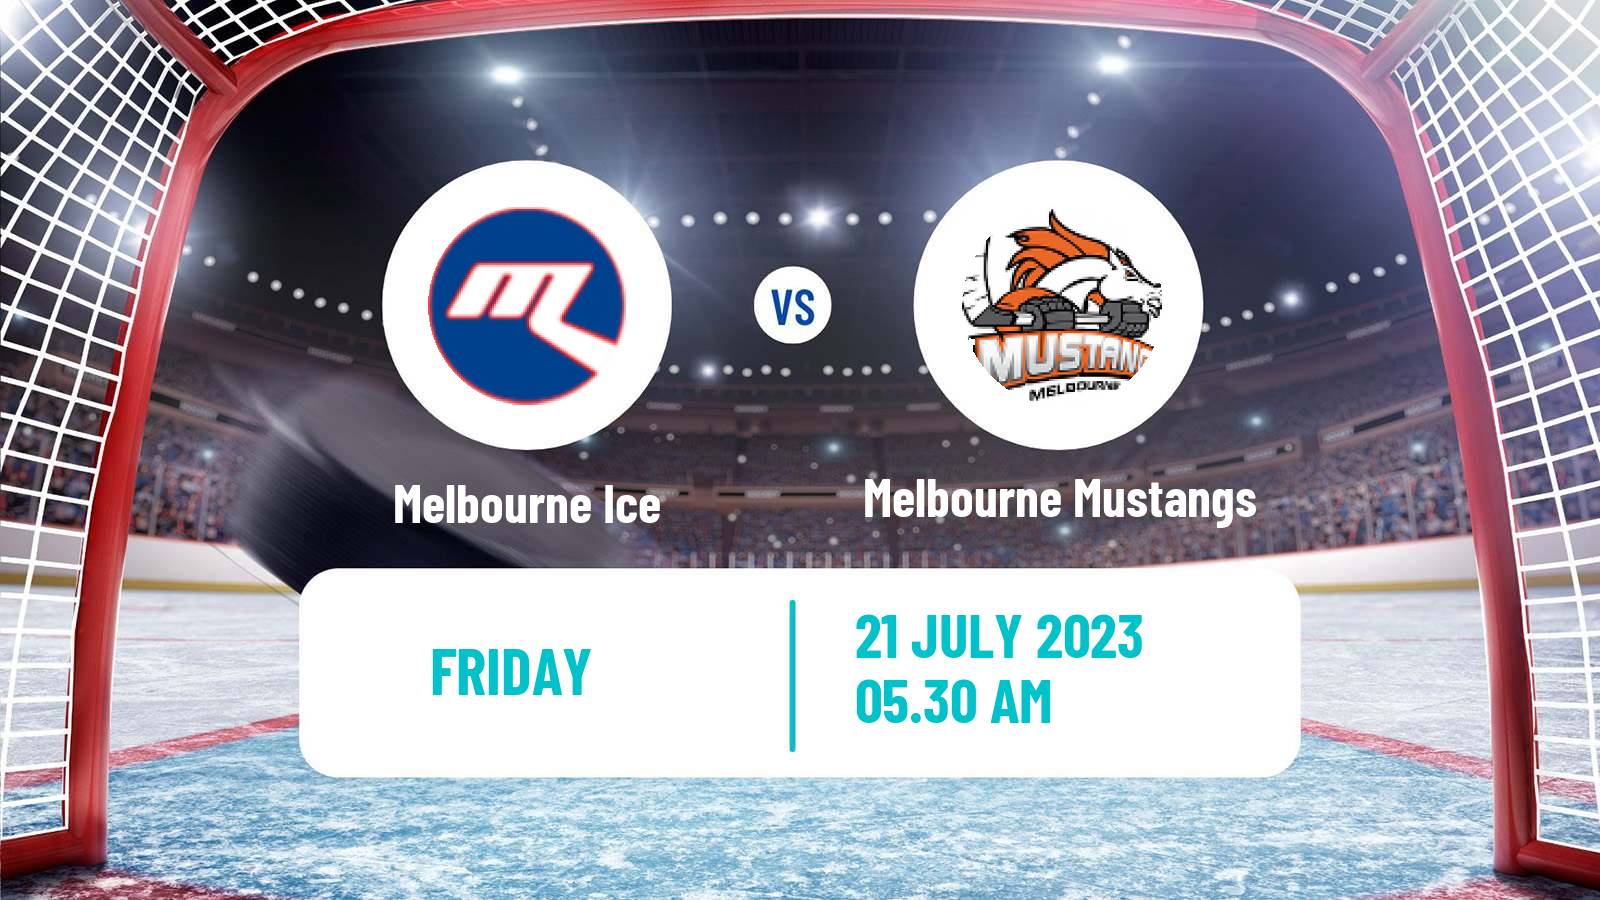 Hockey Australian Ice Hockey League Melbourne Ice - Melbourne Mustangs